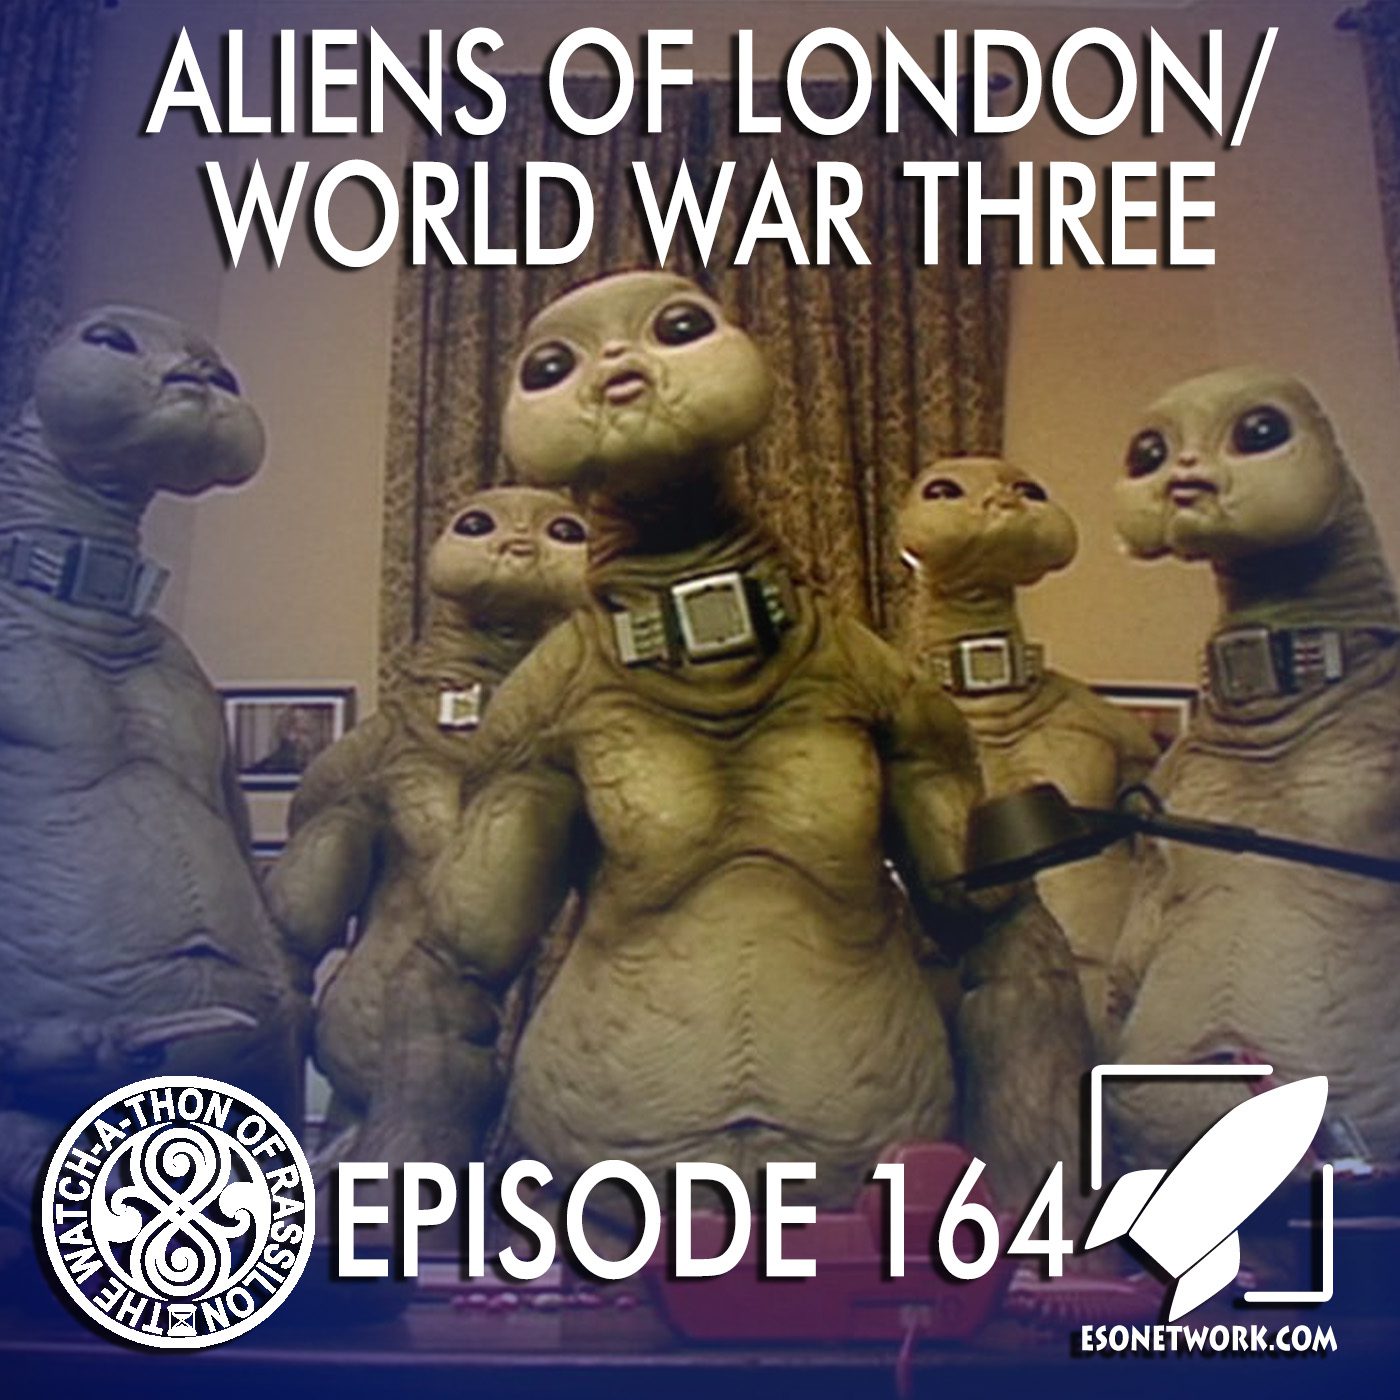 The Watch-A-Thon of Rassilon: Episode 164: Aliens of London/World War Three